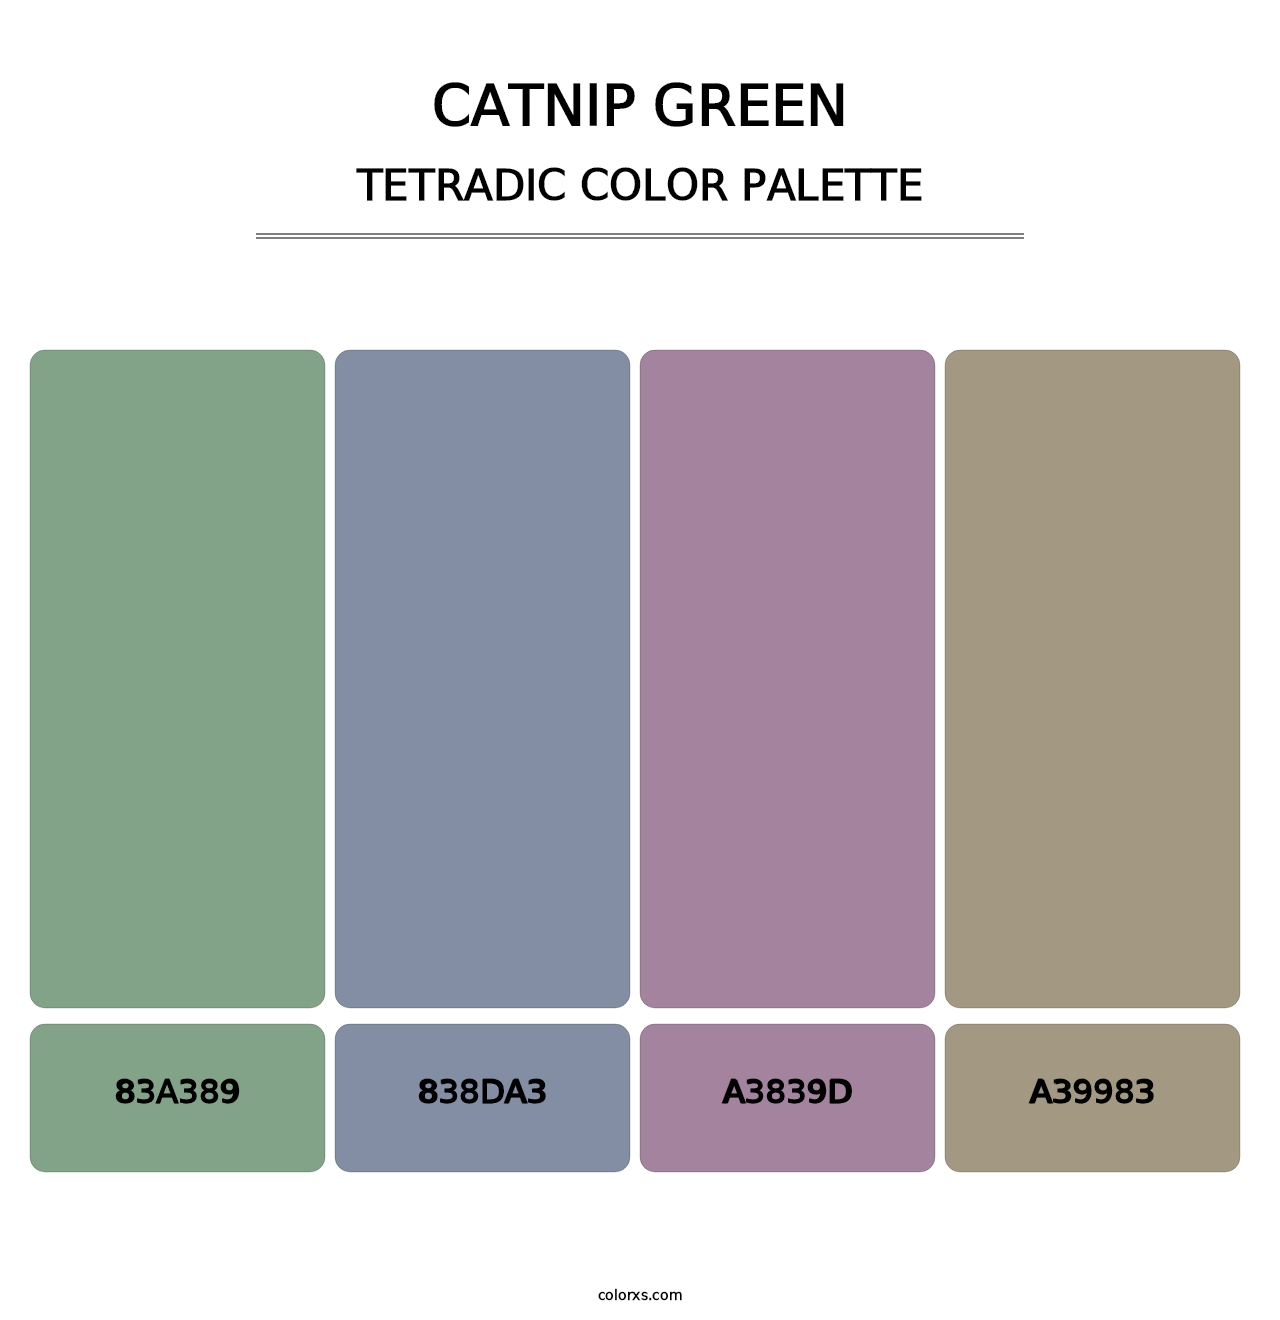 Catnip Green - Tetradic Color Palette